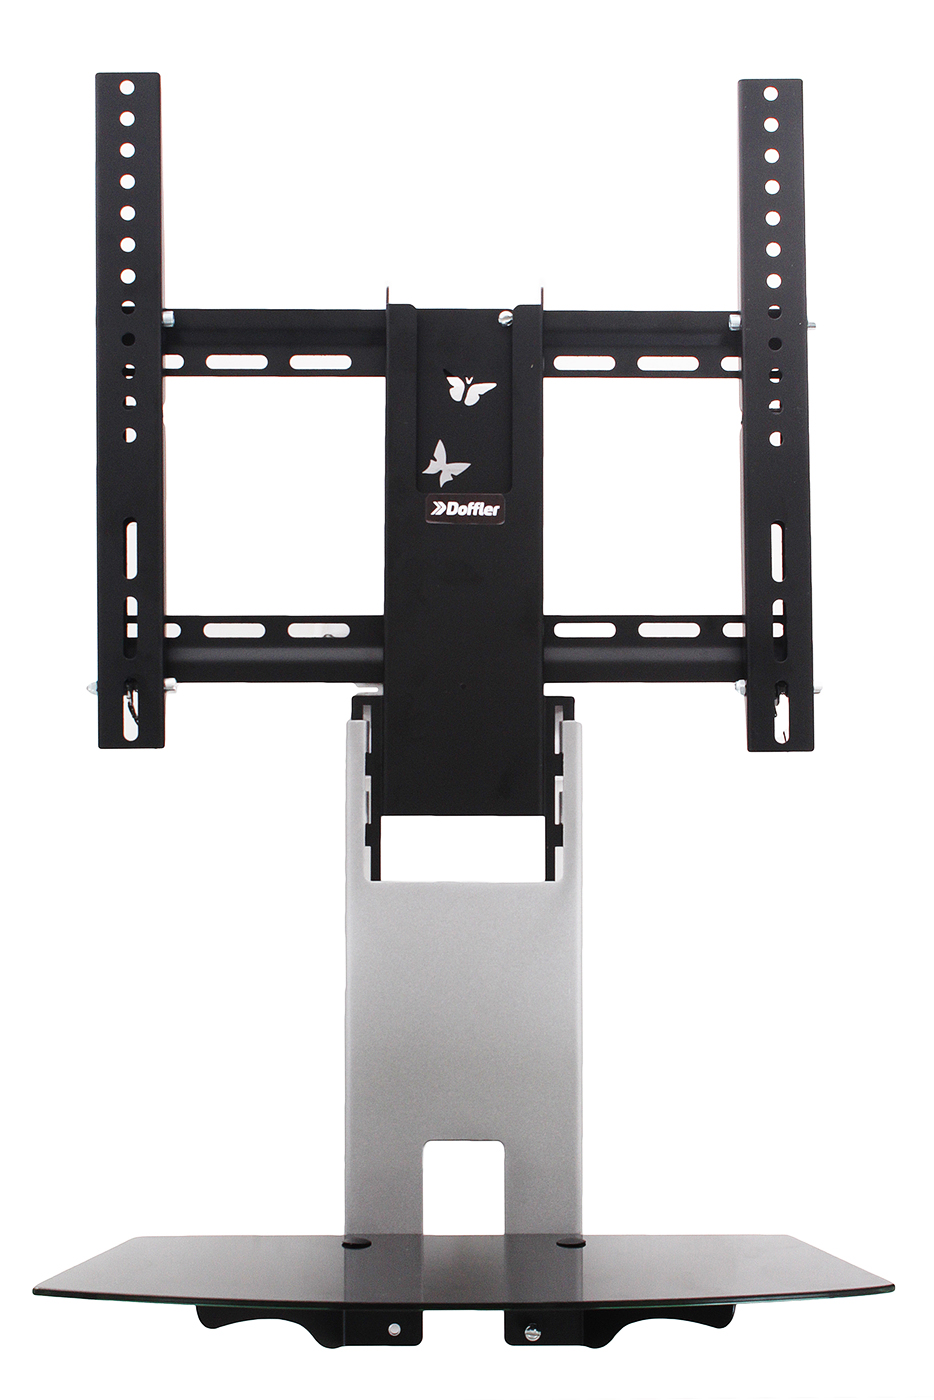 Кронштейн для AV аппаратуры Doffler Wbs 4480, размер 500х200х600 мм, цвет черный